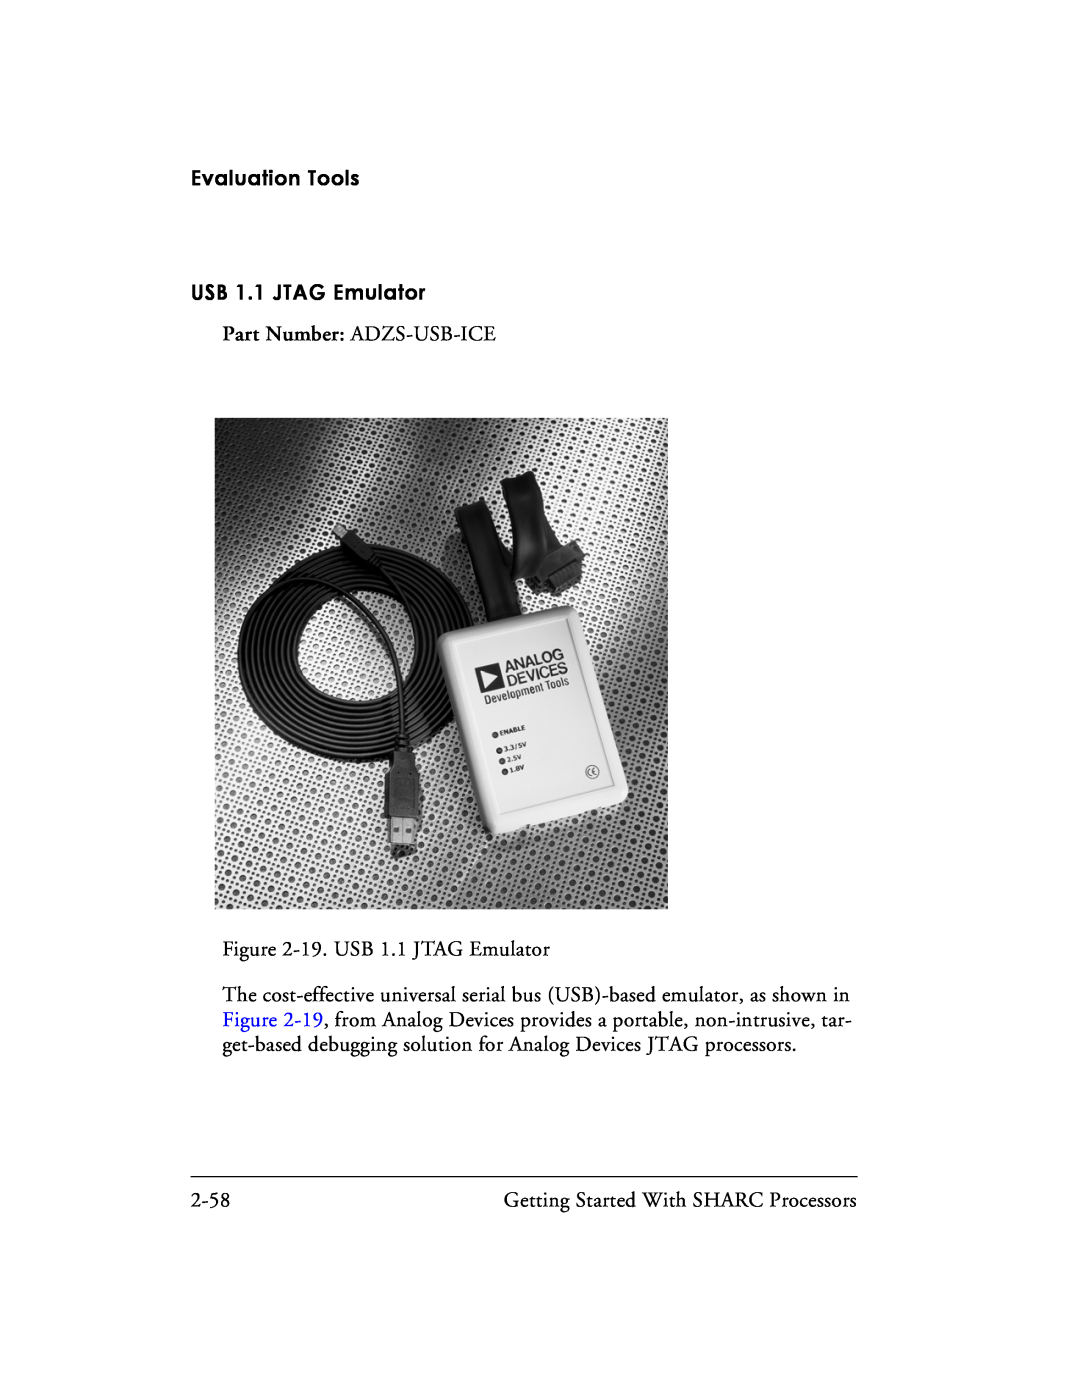 Analog Devices 82-003536-01 manual Evaluation Tools USB 1.1 JTAG Emulator, Part Number ADZS-USB-ICE 